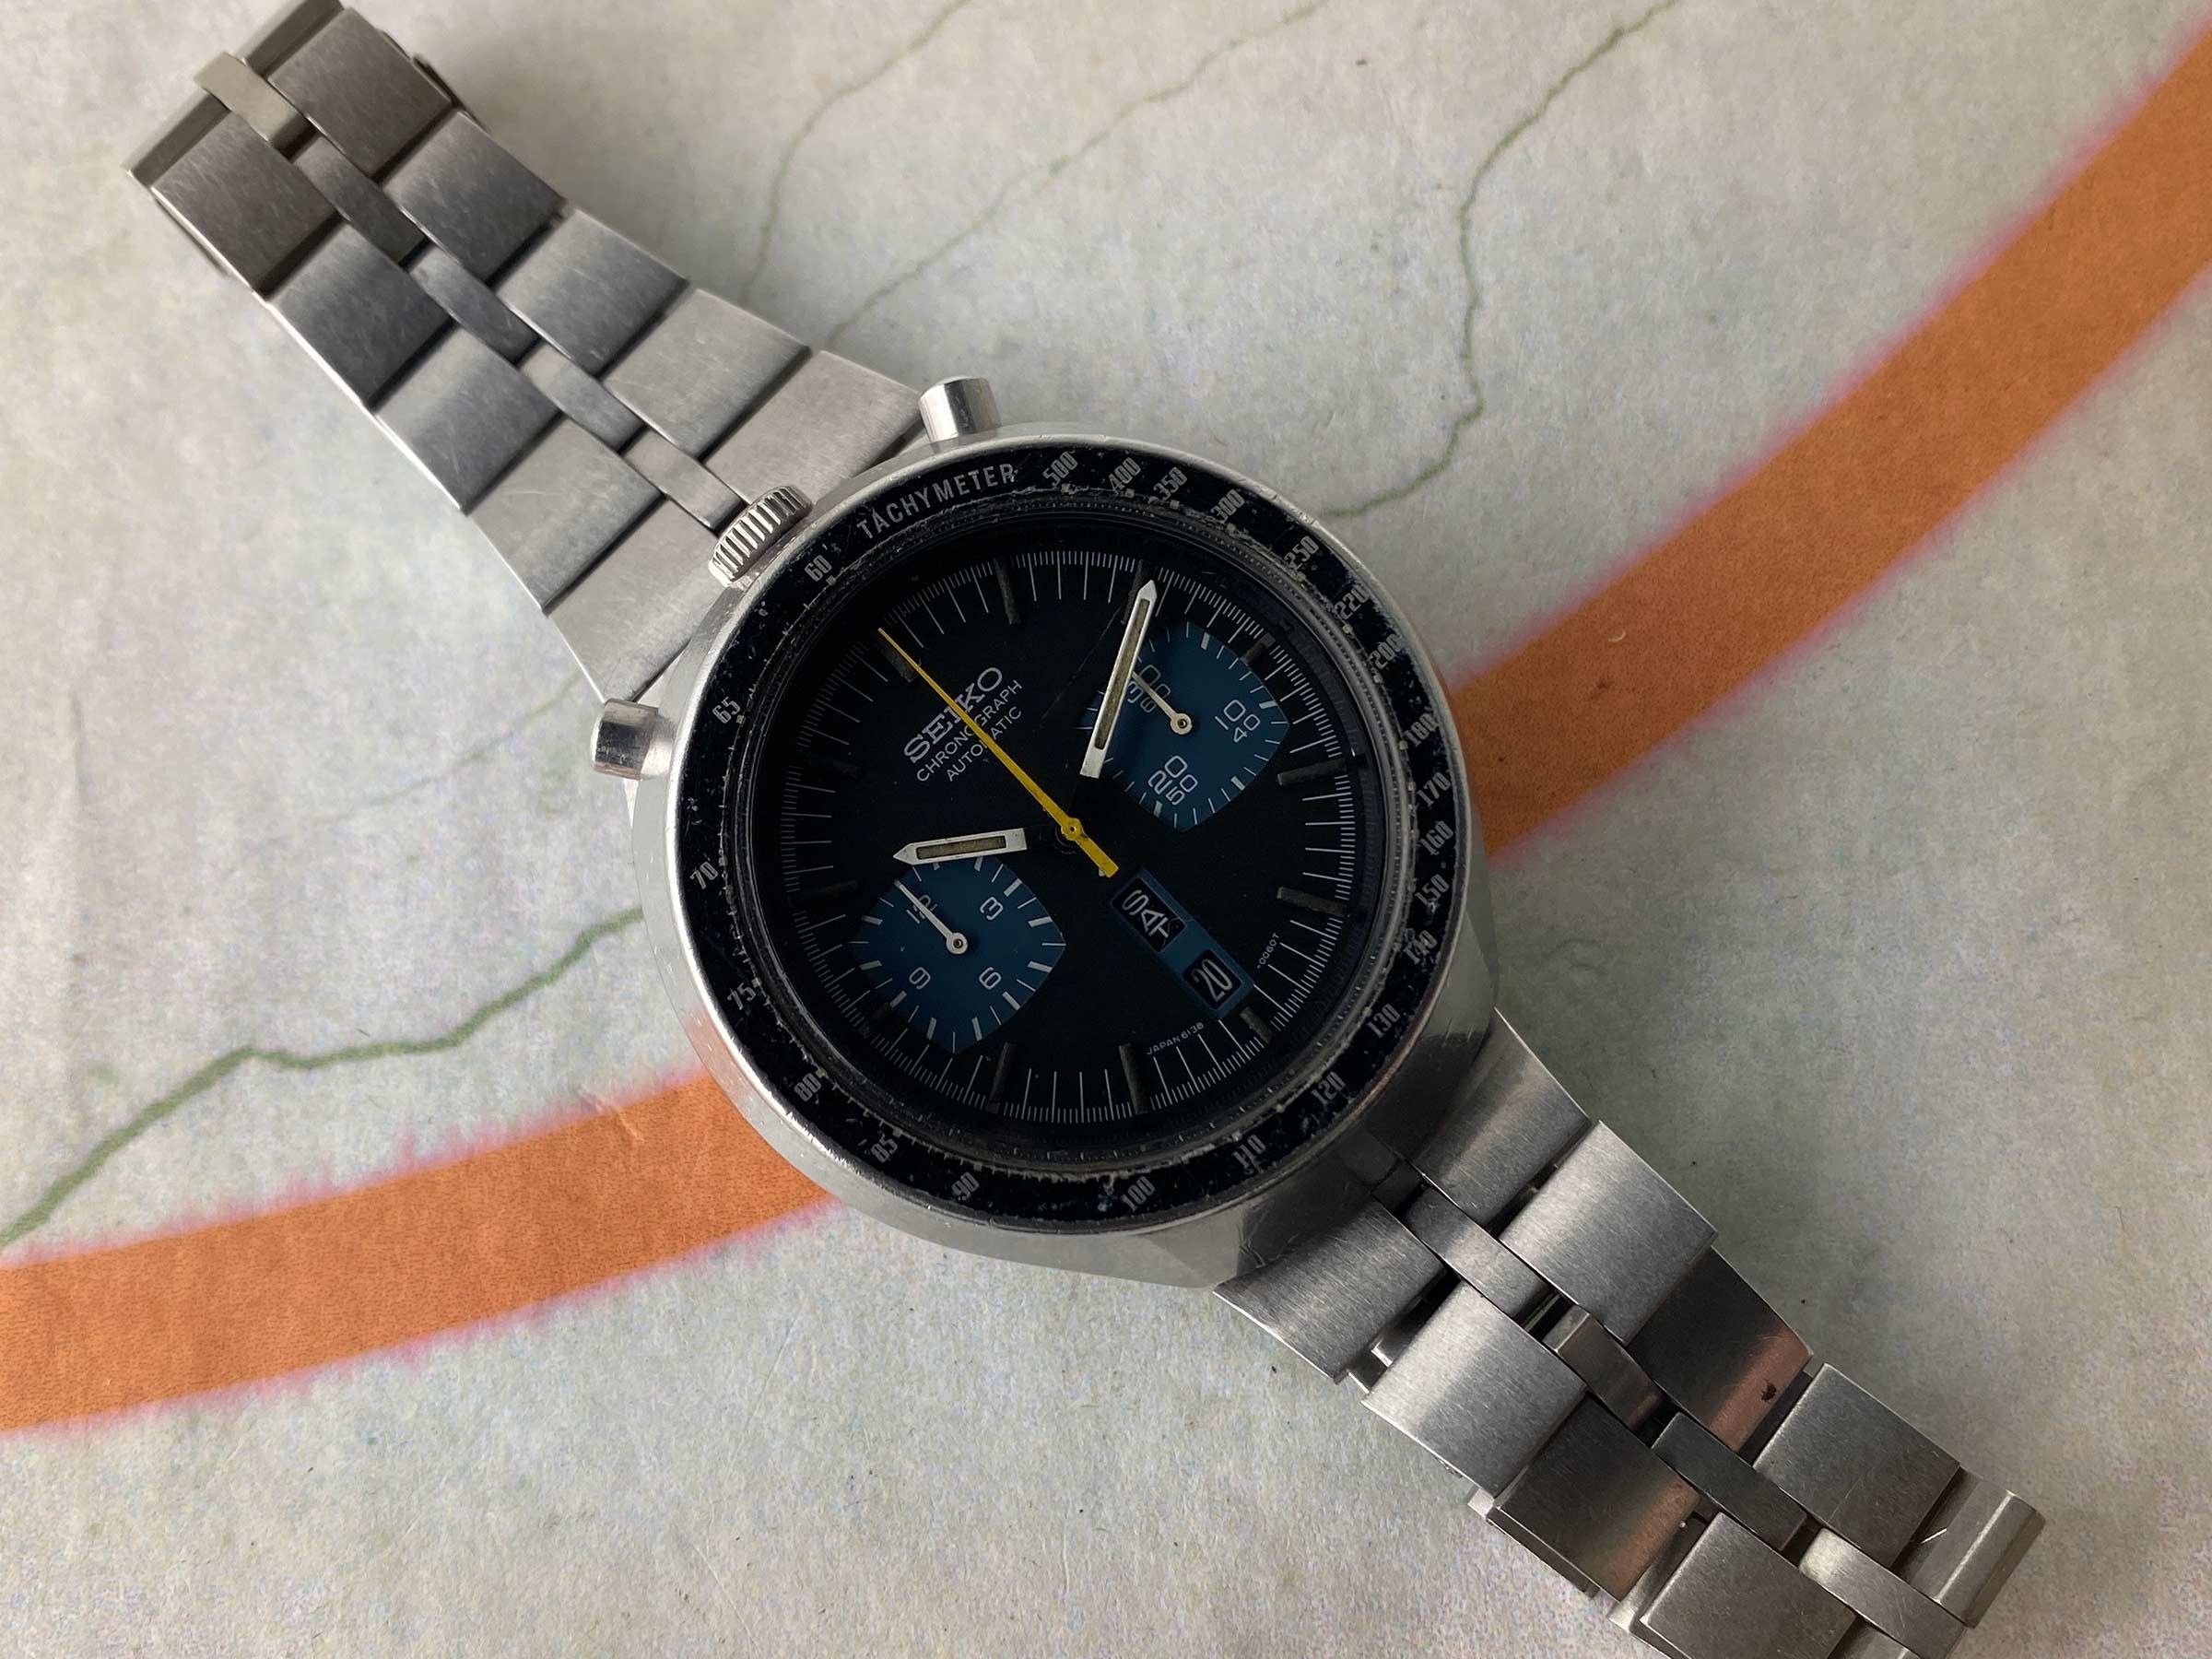 SEIKO BULLHEAD CHRONOGRAPH AUTOMATIC Ref 6138-0040 JAPAN J Vintage  automatic chronograph watch Cal 6138B *** ALL ORIGINAL *** Seiko Vintage  watches - Watches83